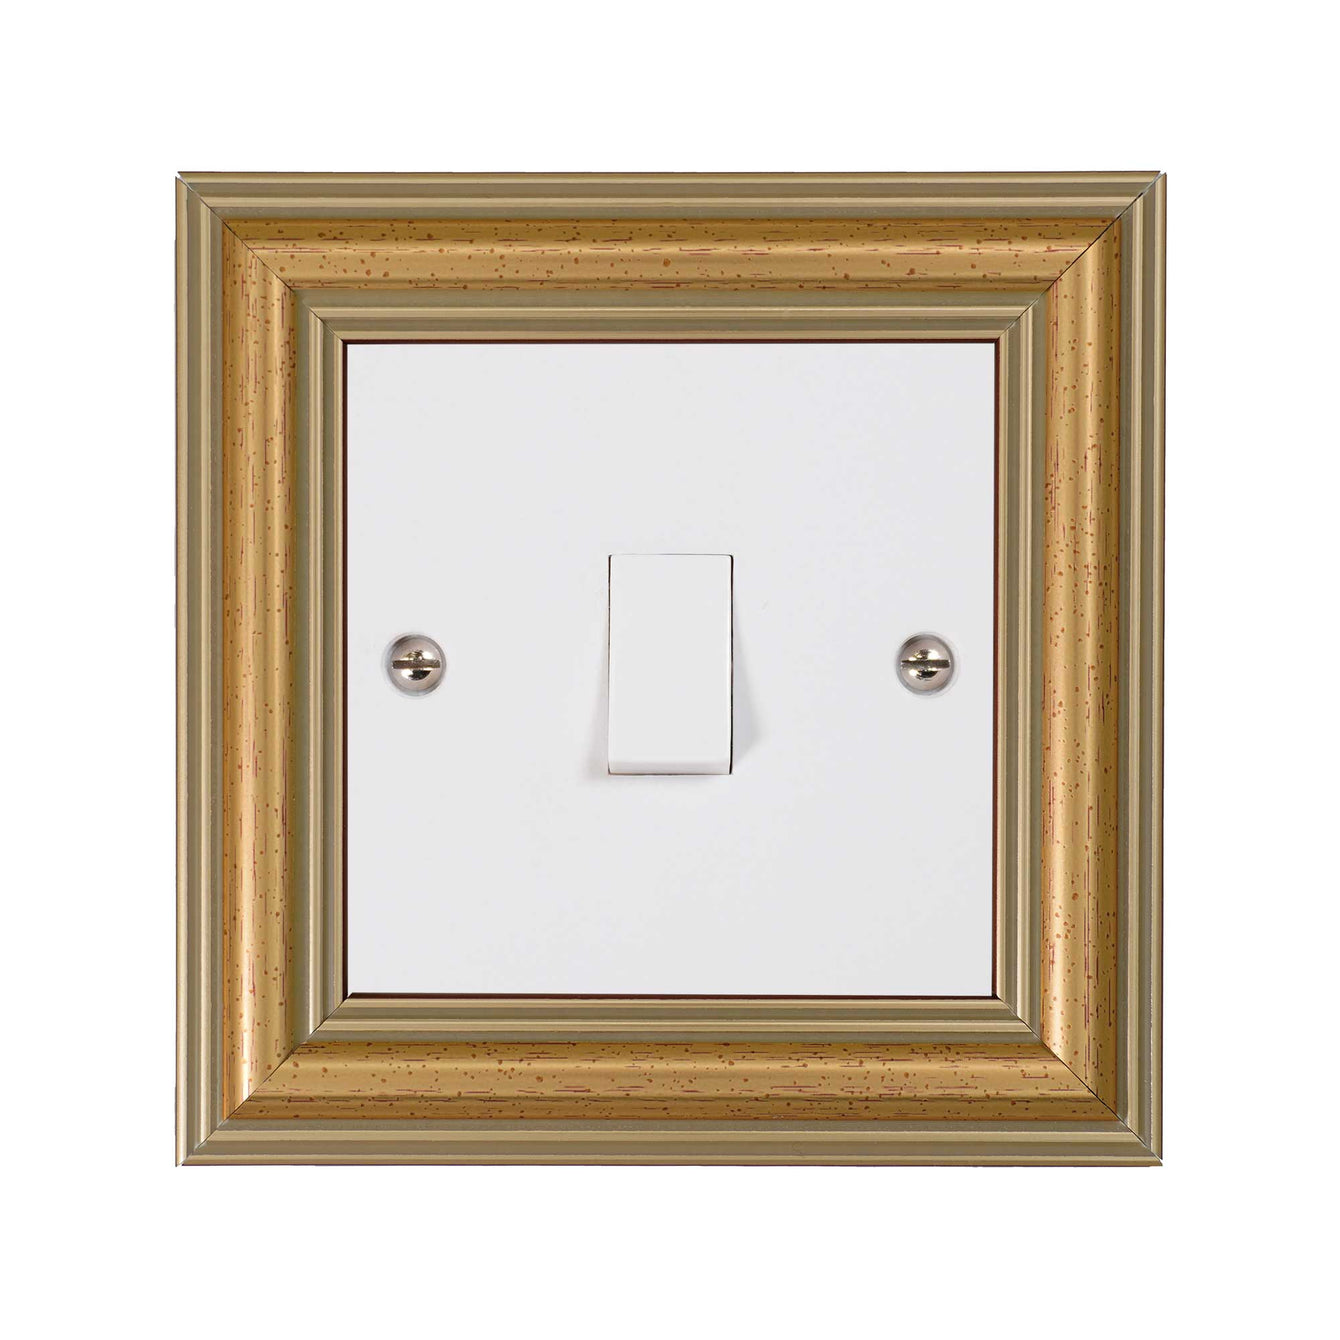 ElekTek Decorative Switch Surround Frame Cover Finger Plate Edwardian Regency Walnut/Gold